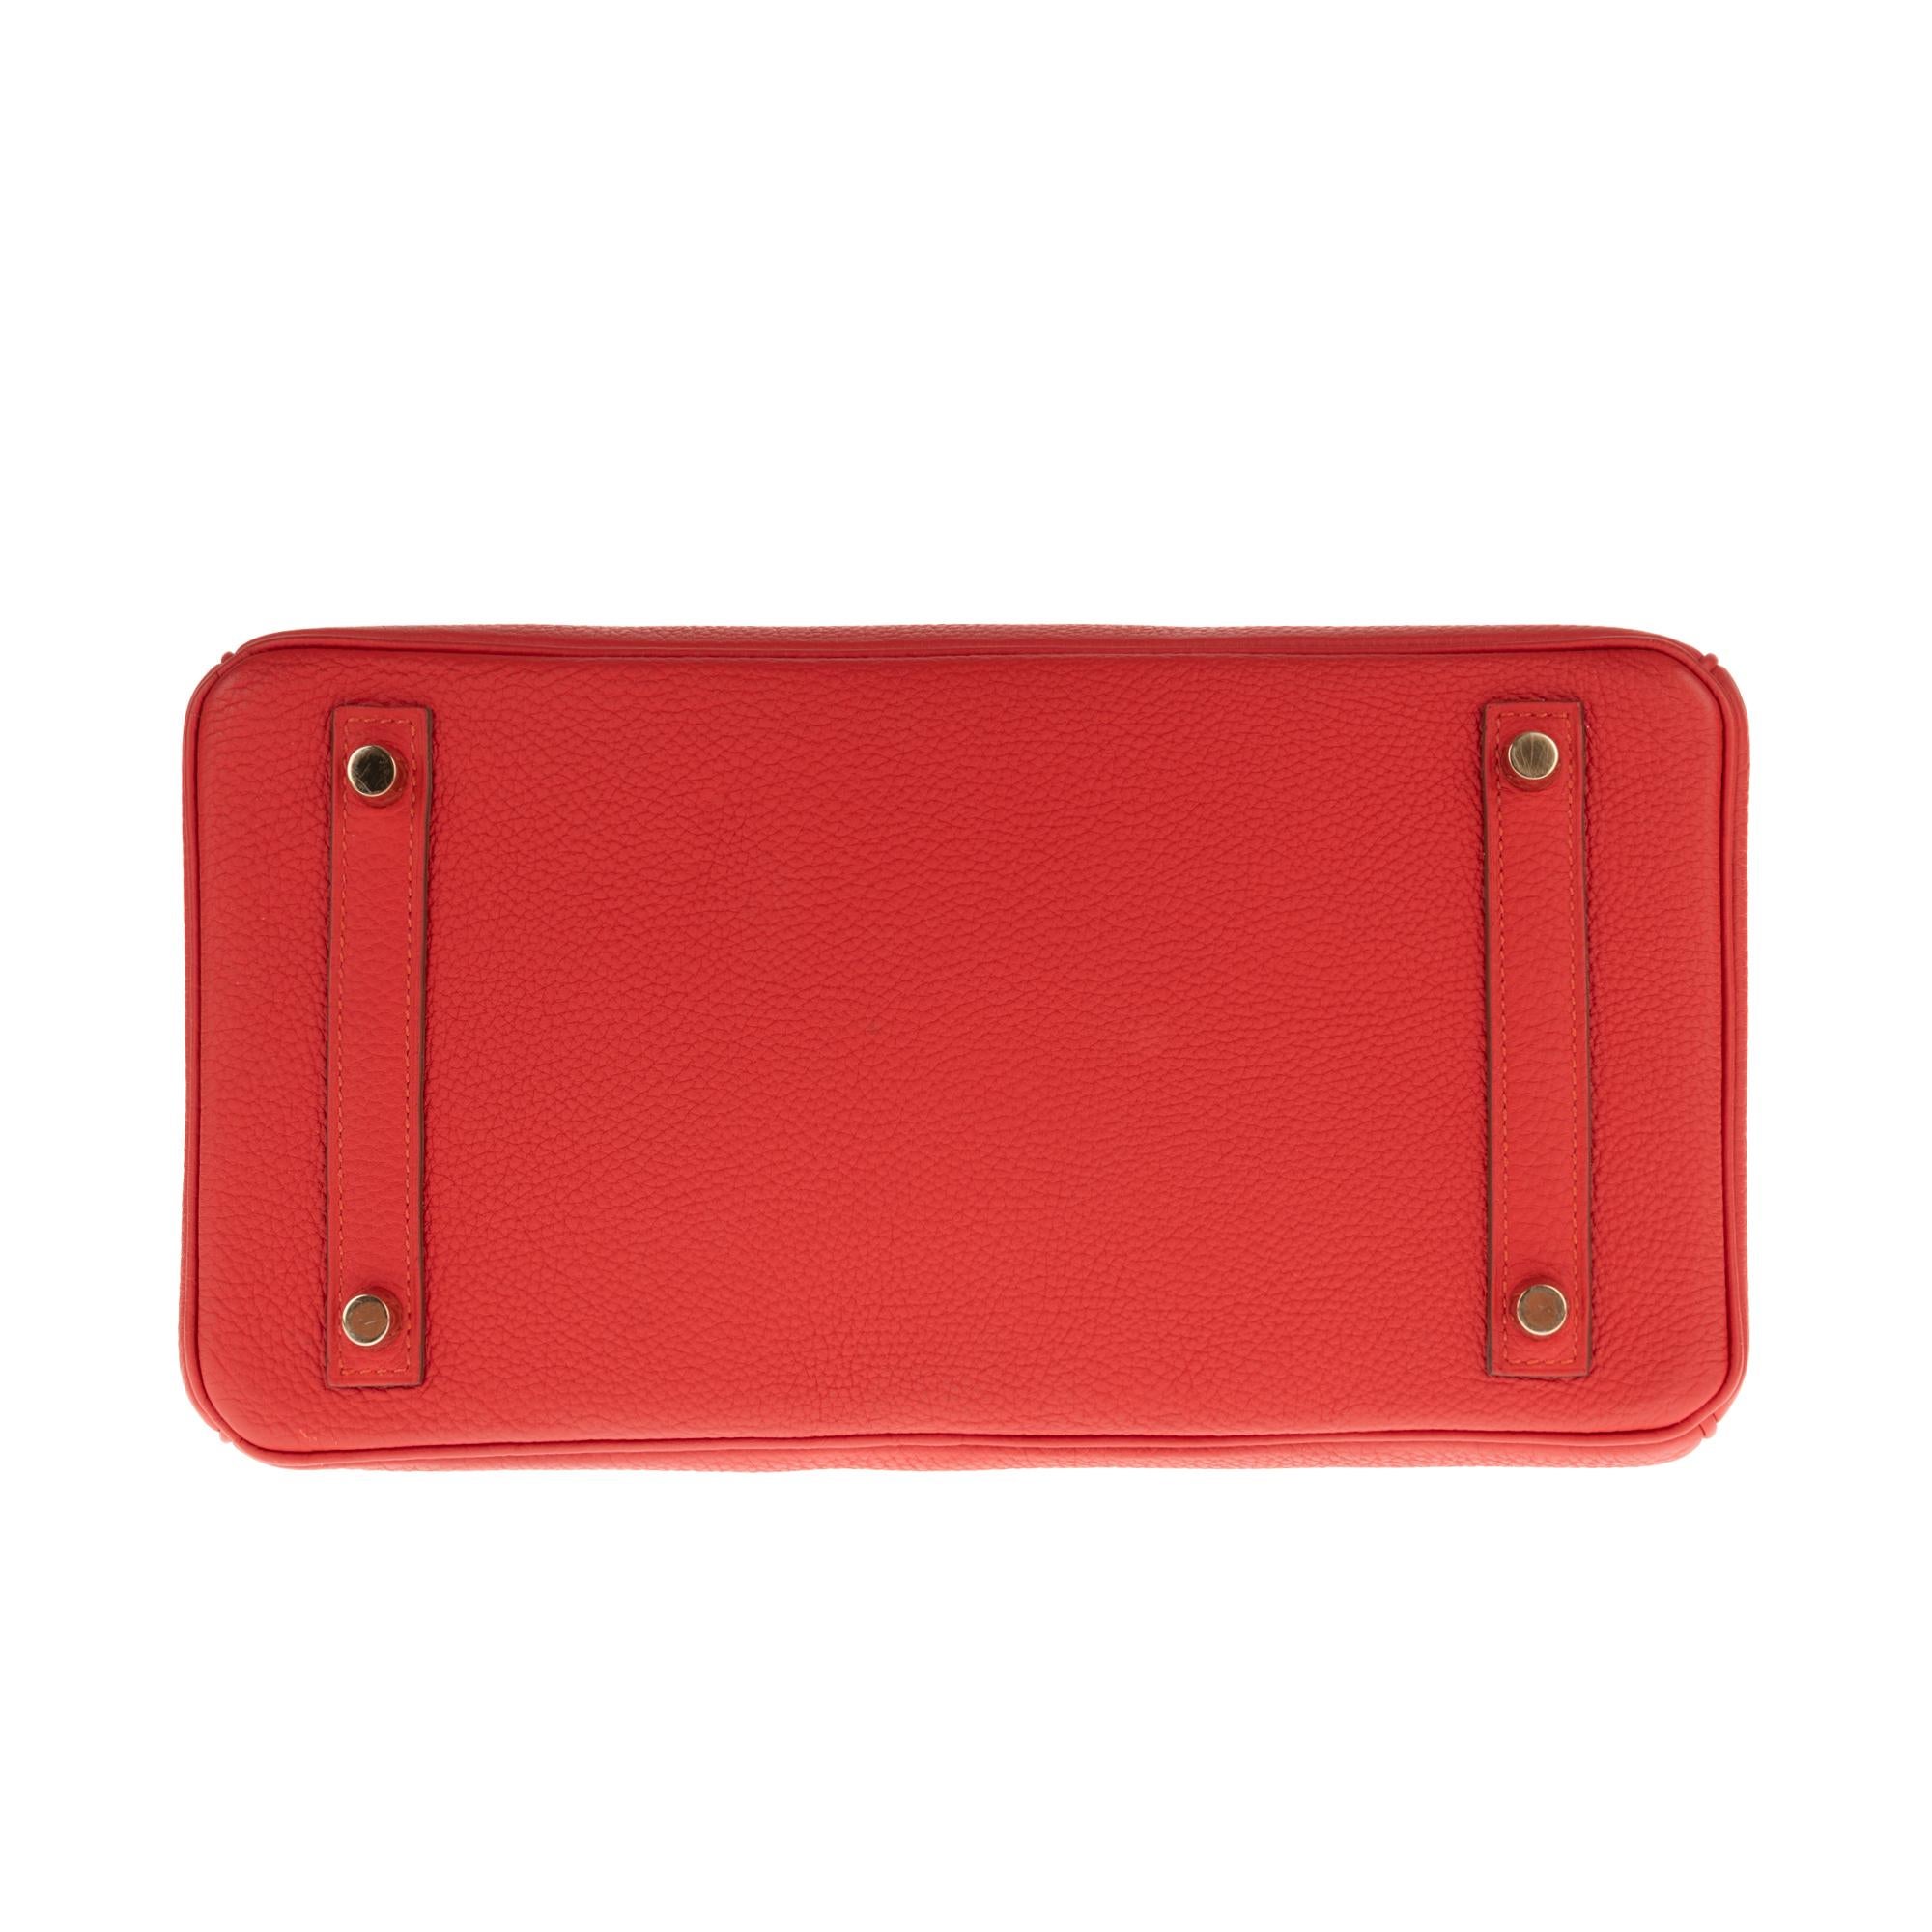 Beautiful Hermès Birkin 30 handbag in Red Togo leather, gold hardware  1